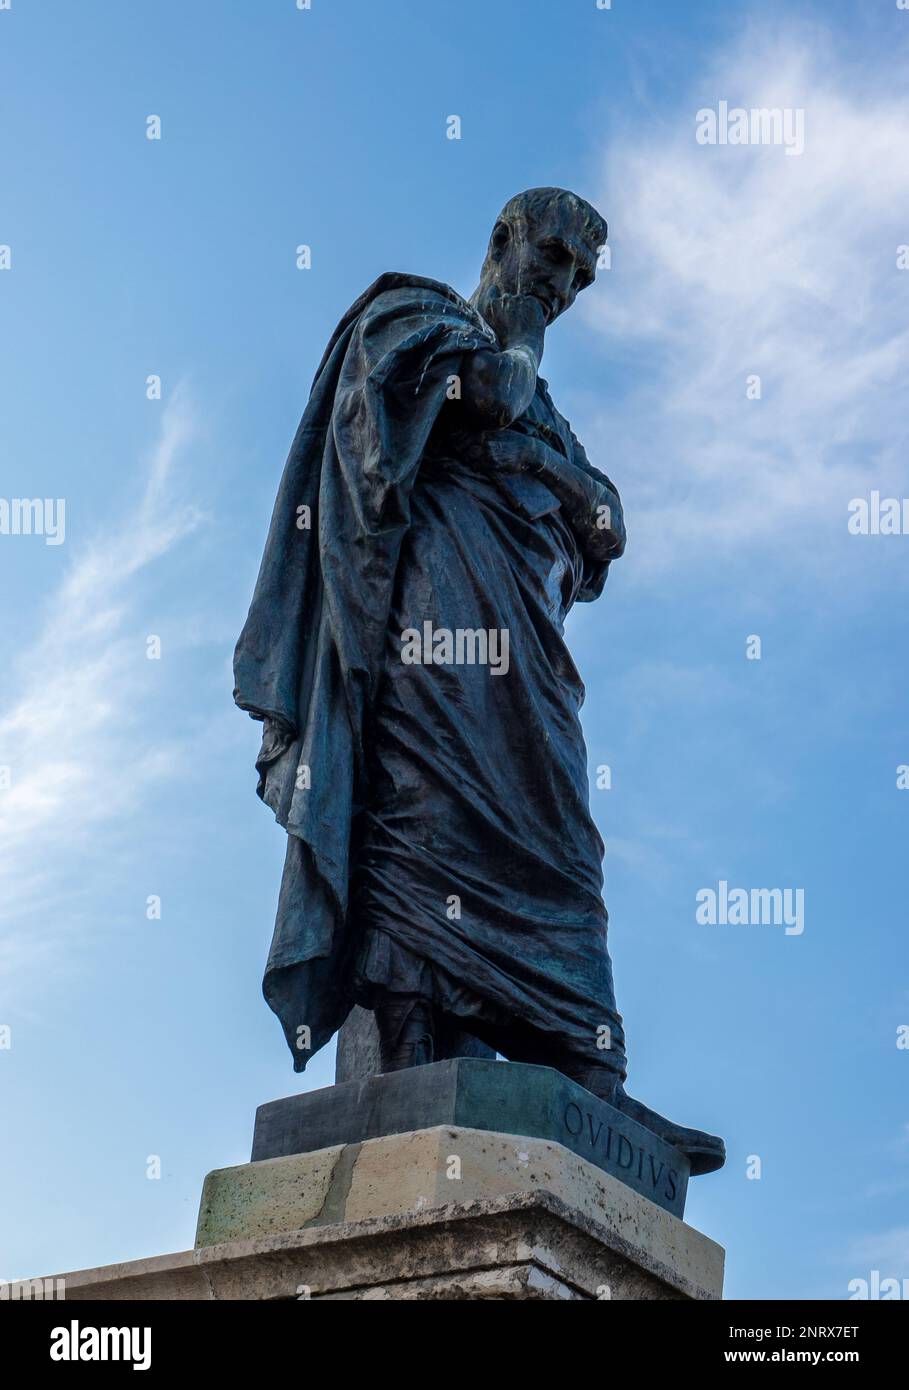 A close-up of the Roman poet Ovidius statue in Constanta city - Romania Stock Photo